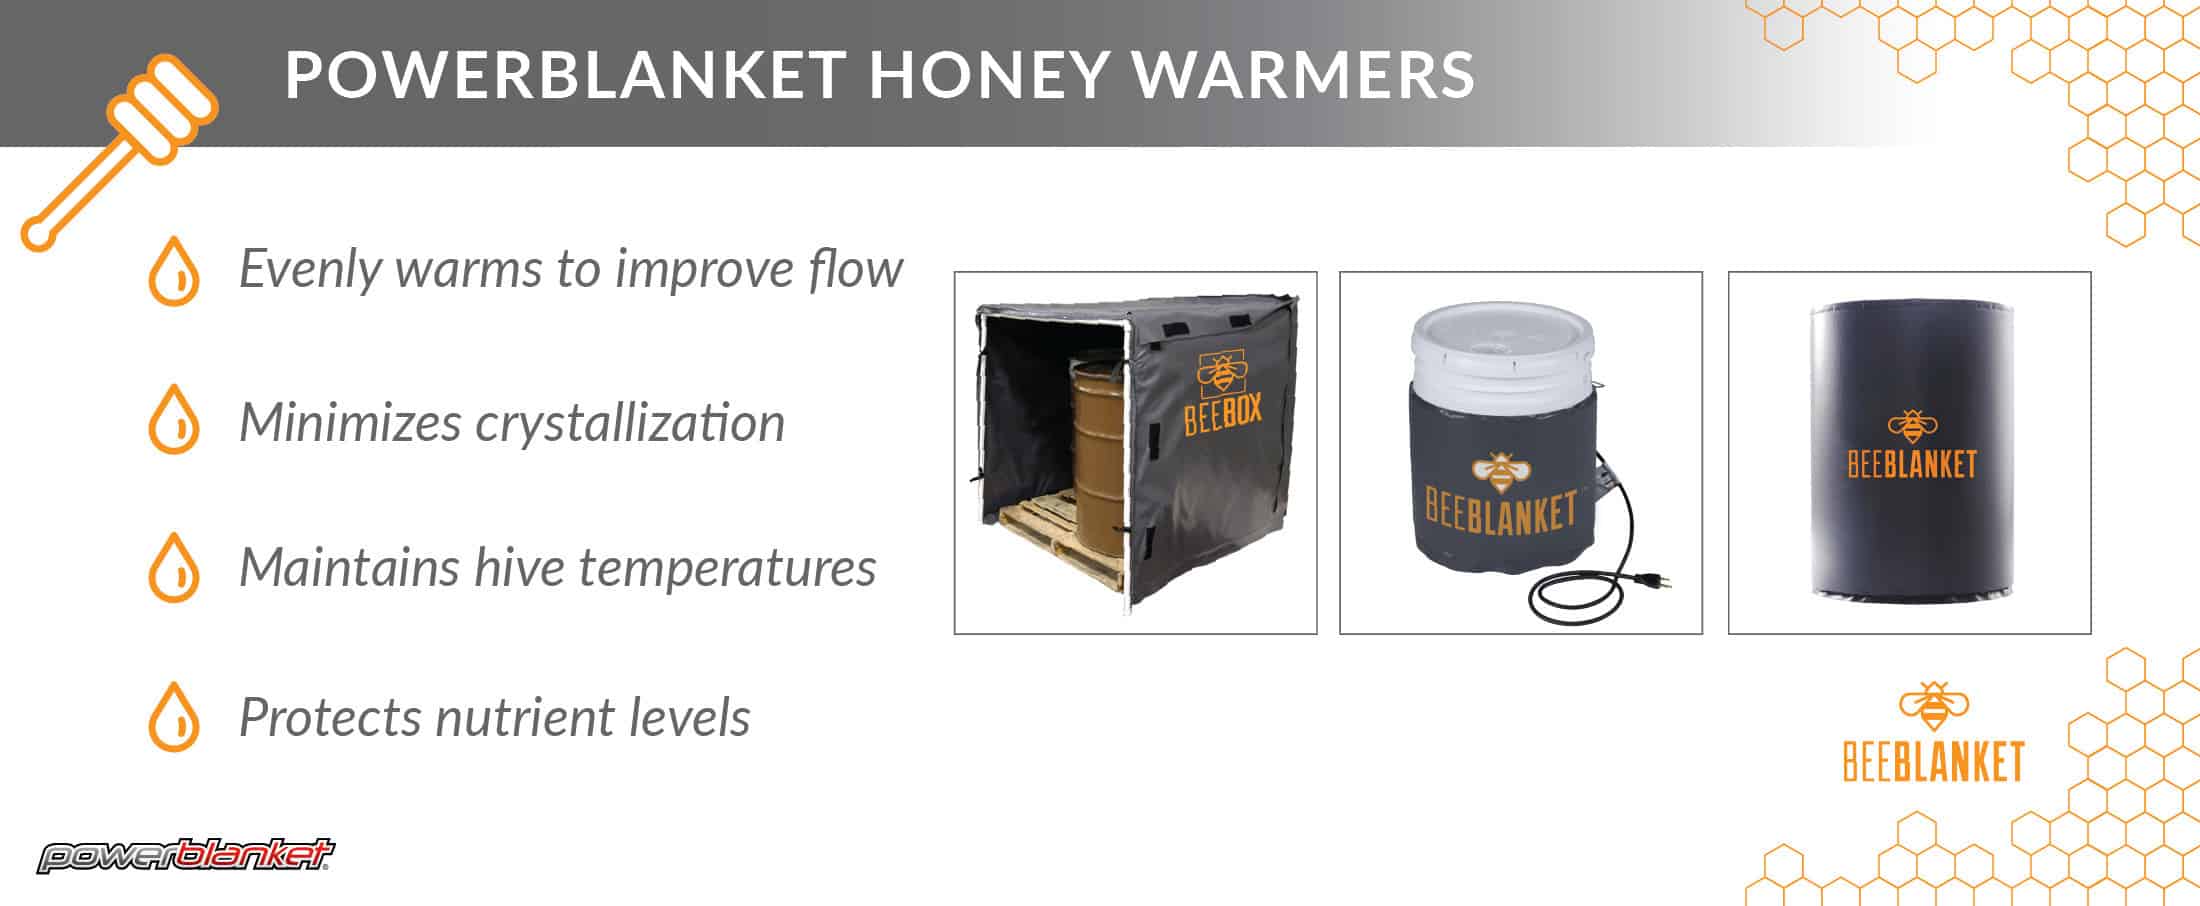 PowerBlanket散装蜂蜜温暖器